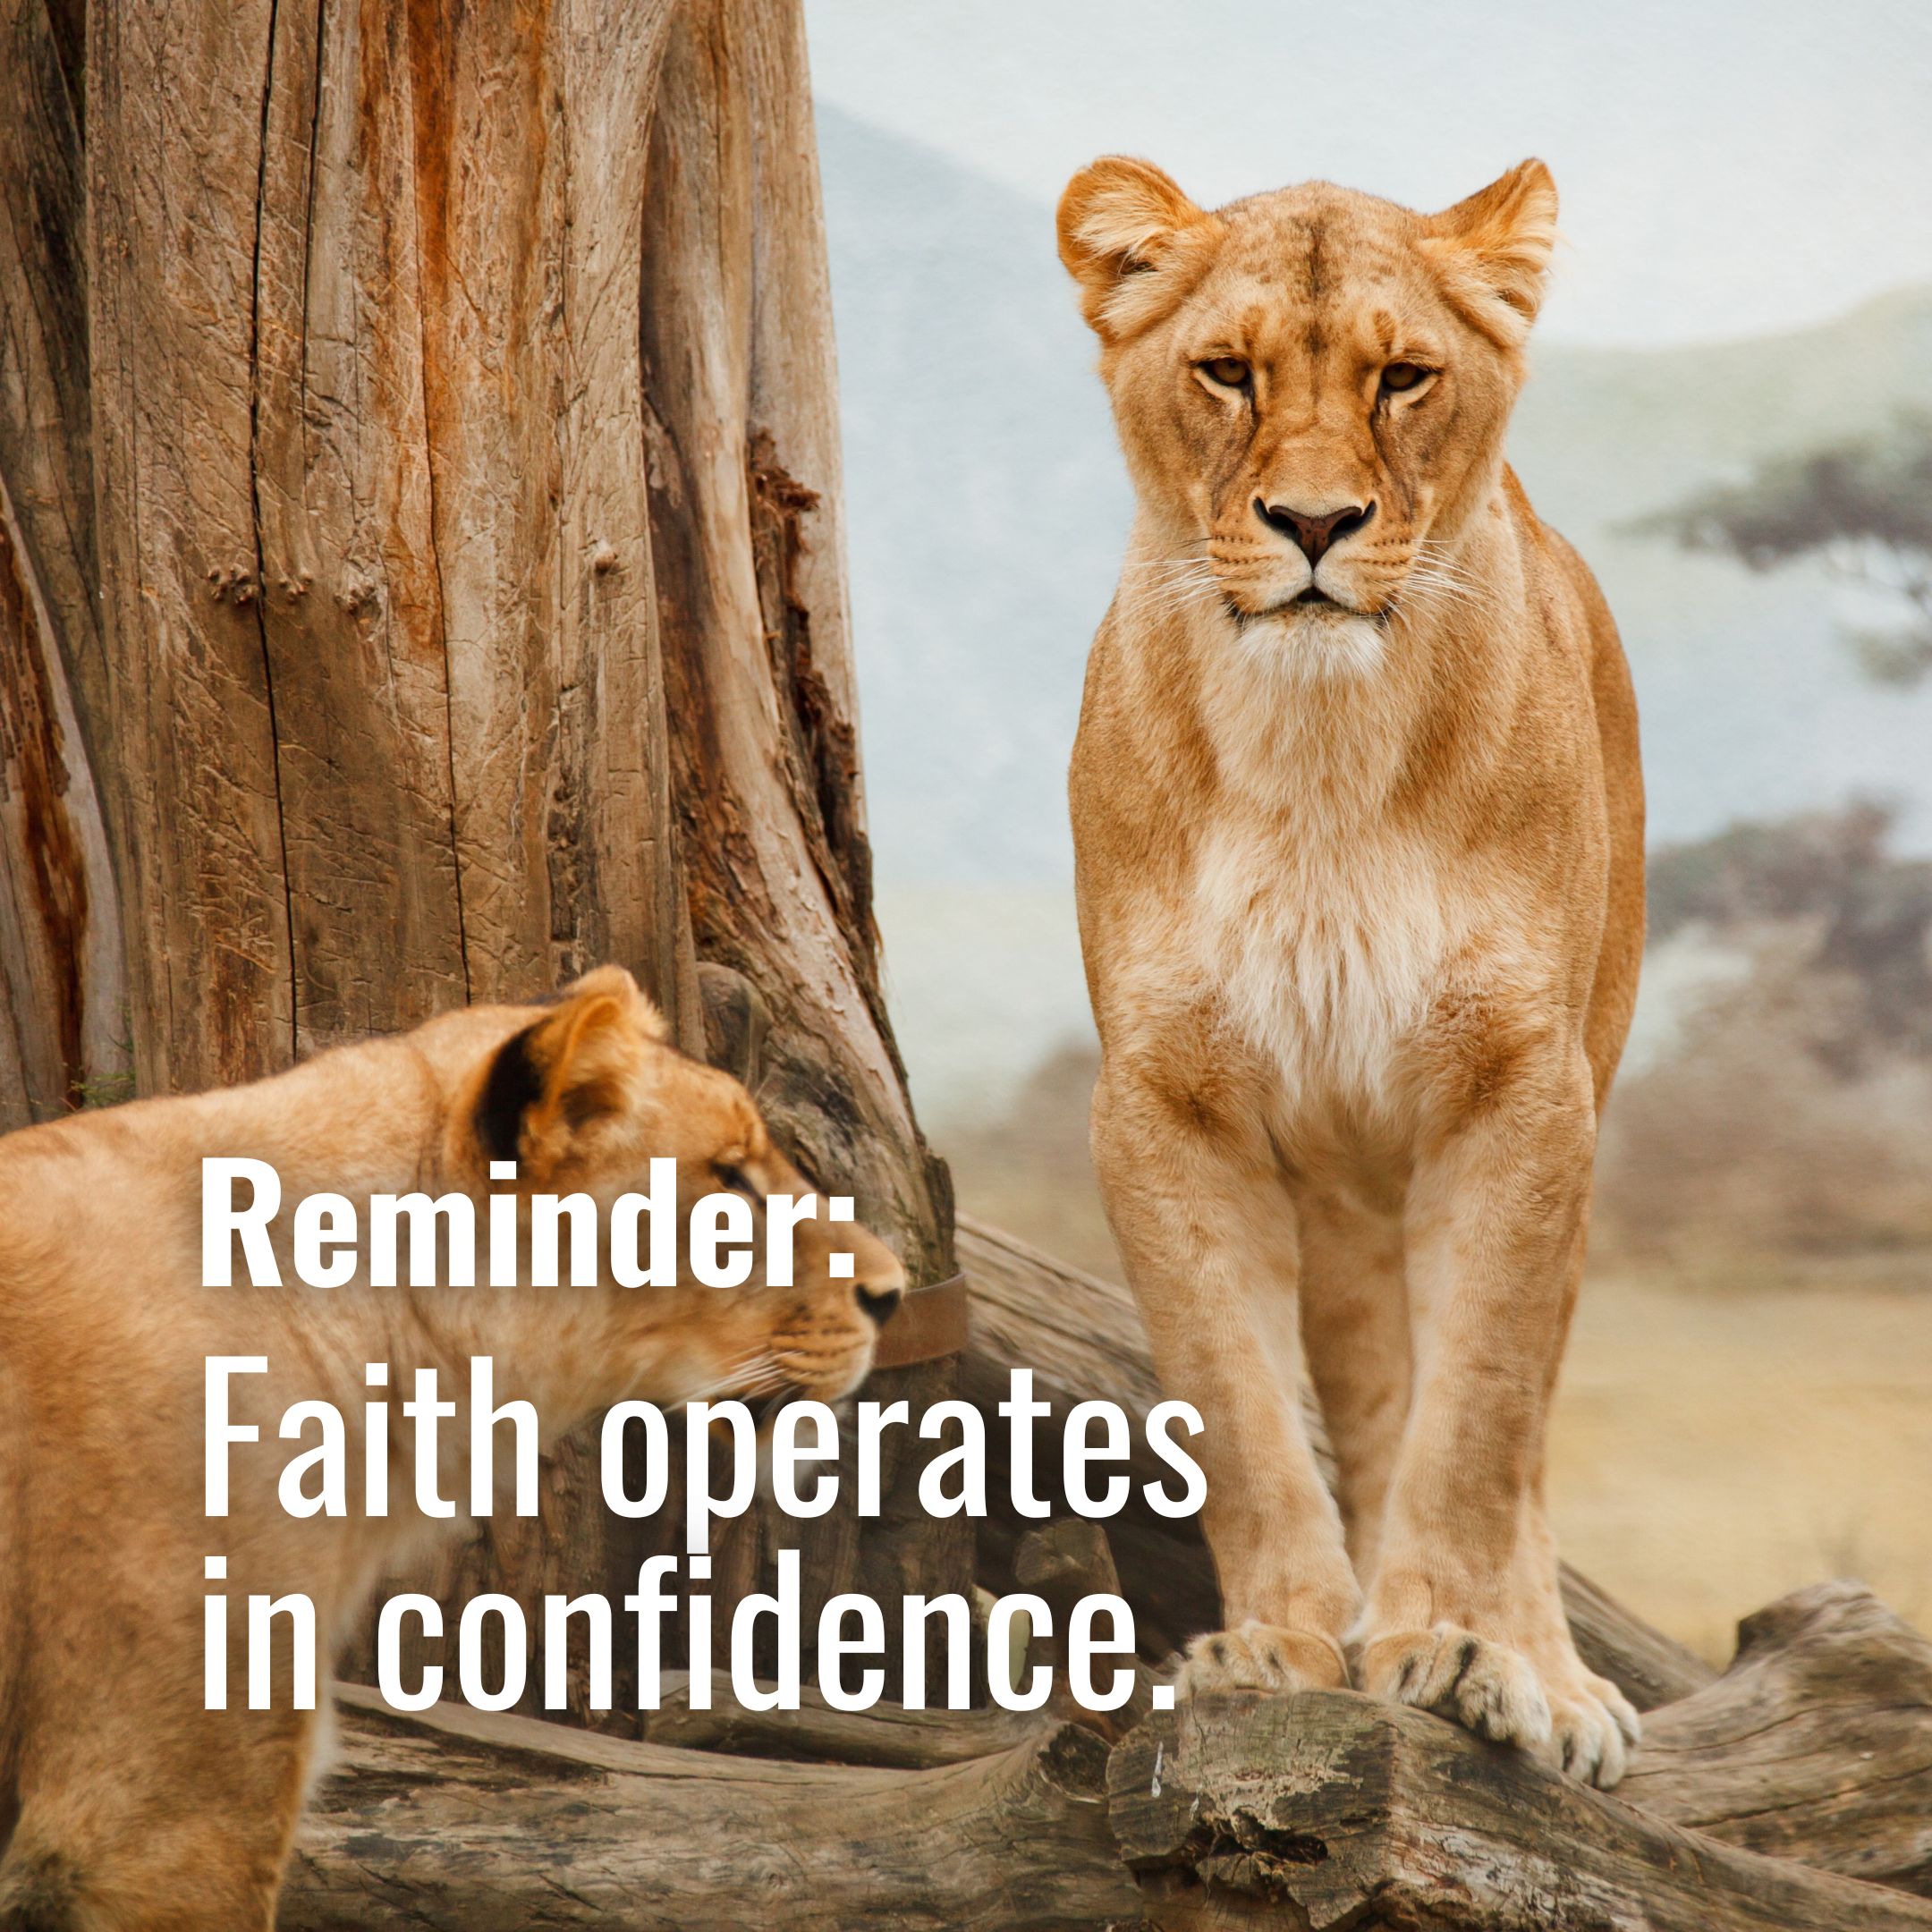 Faith operates in confidence.